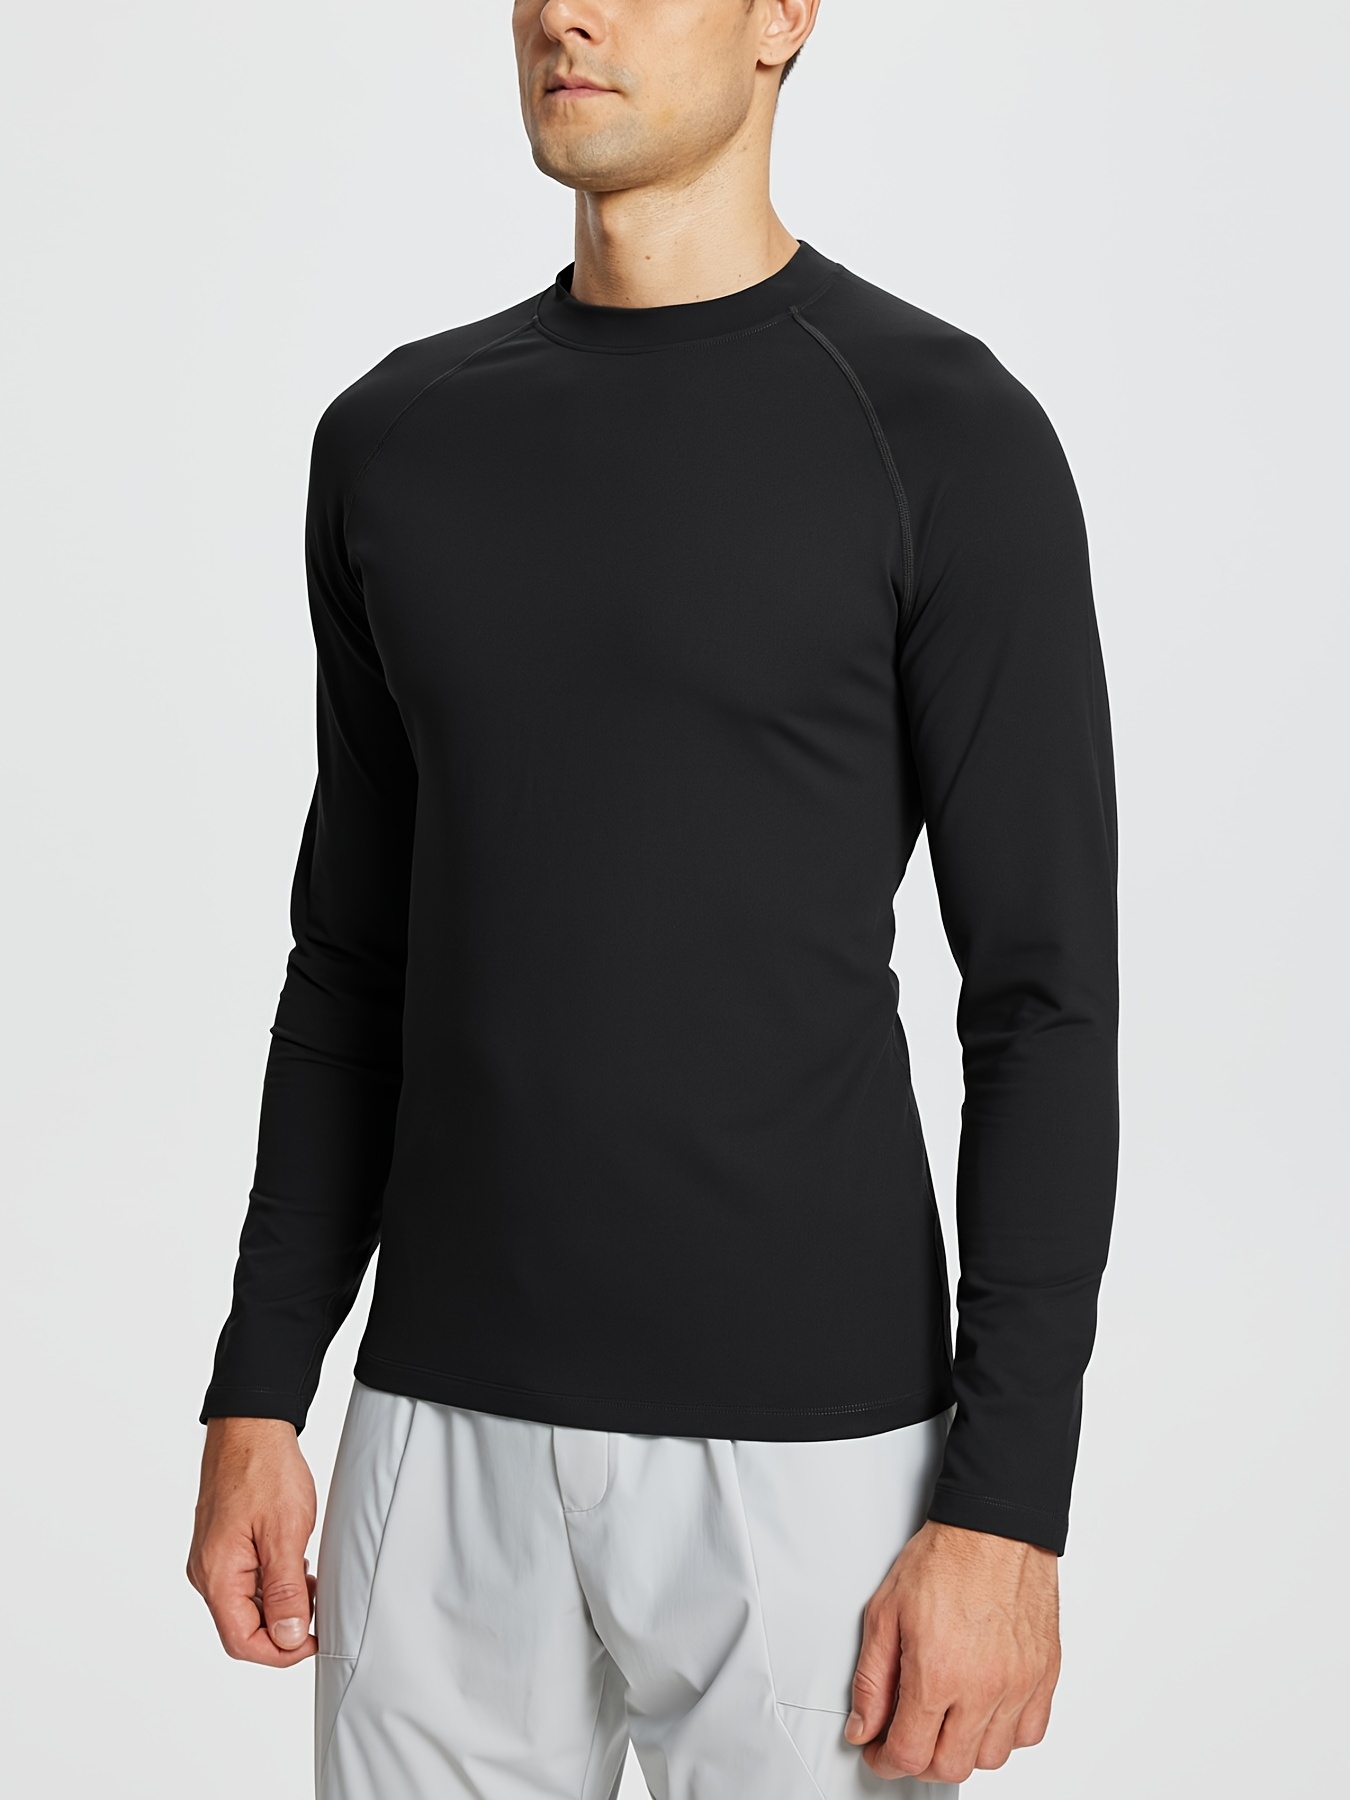 BALEAF Men's Long Sleeve Running Quick Dry Workout Shirts Athletic